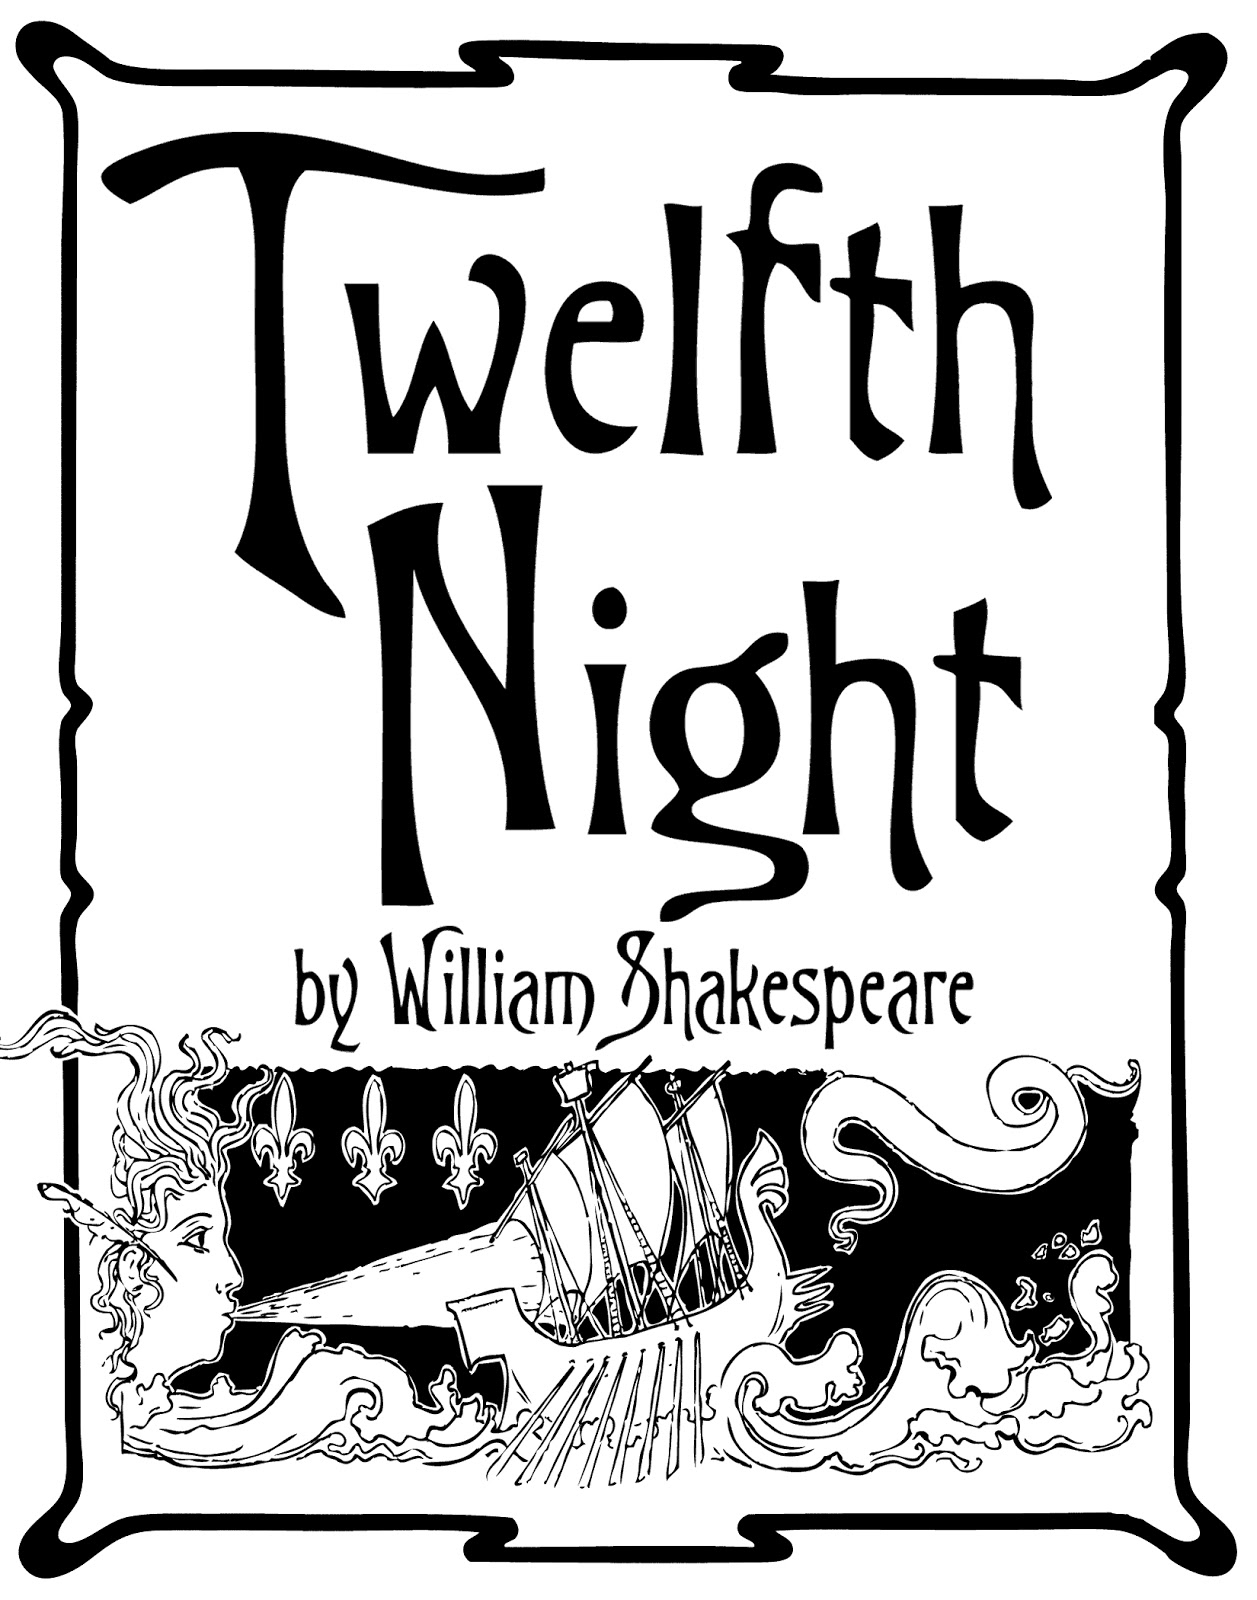 Book twelfth night.